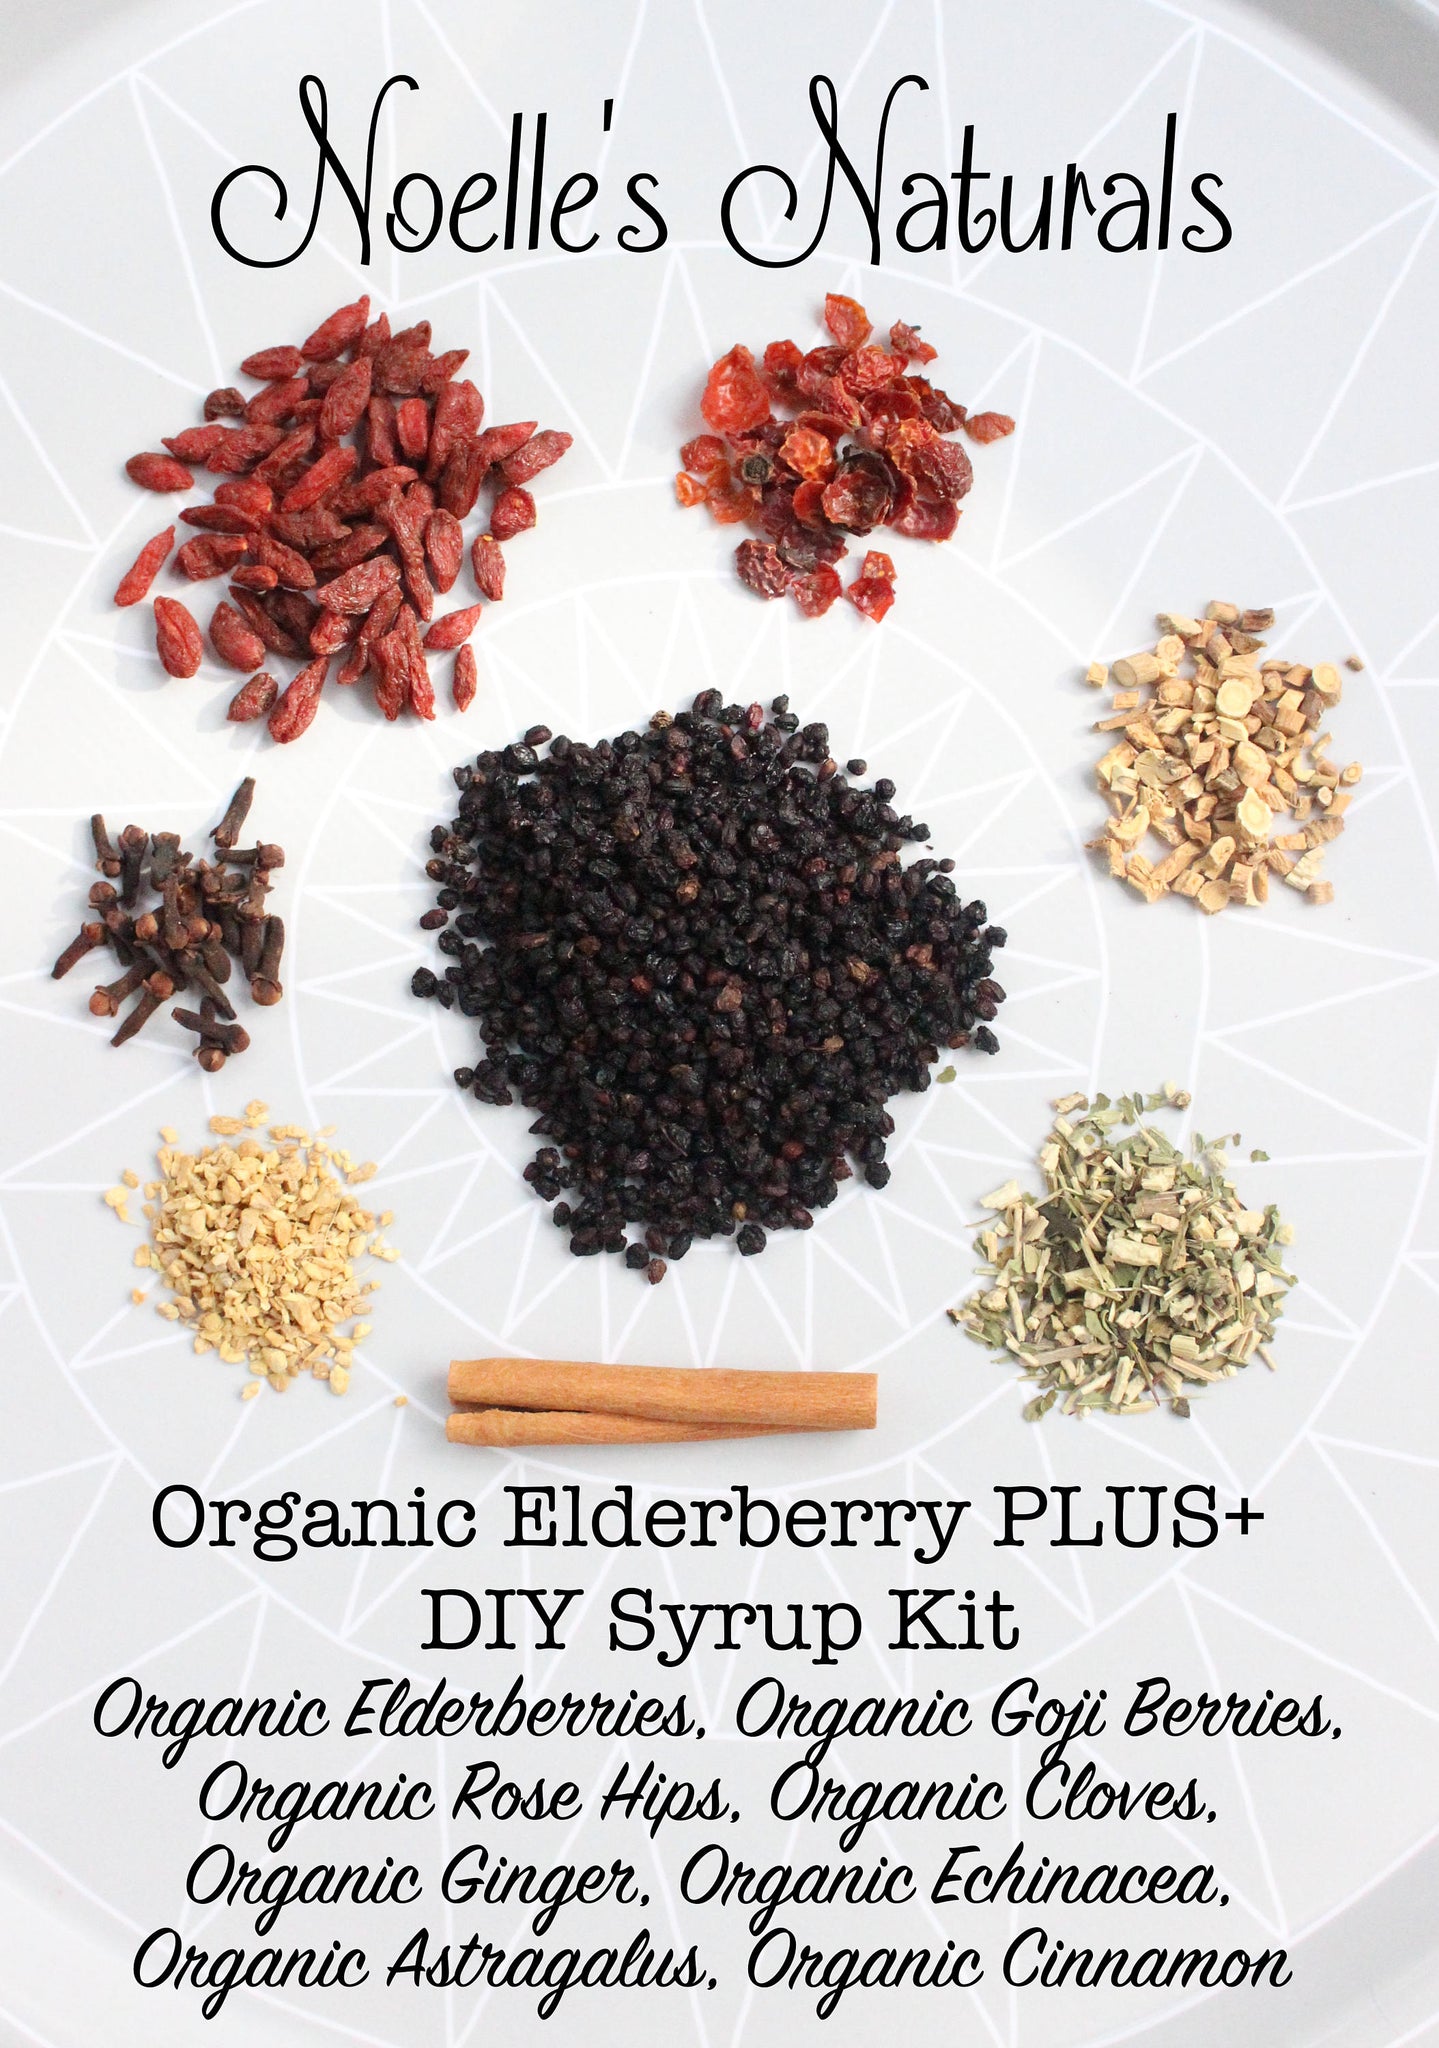 Elderberry Plus+ DIY Syrup Kit